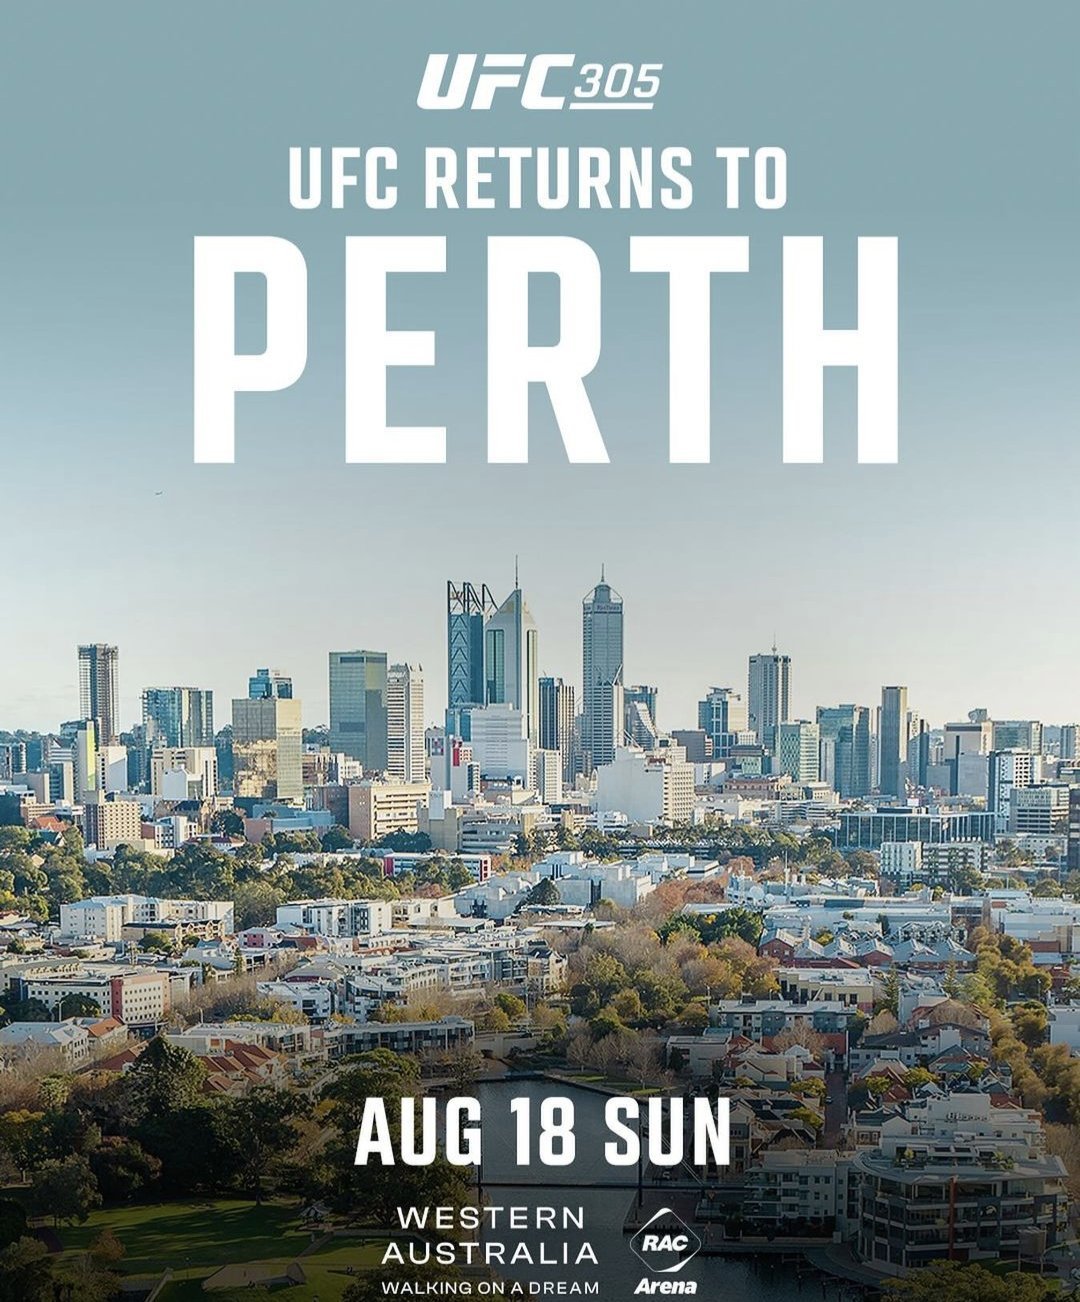 La UFC llegar a Australia en verano